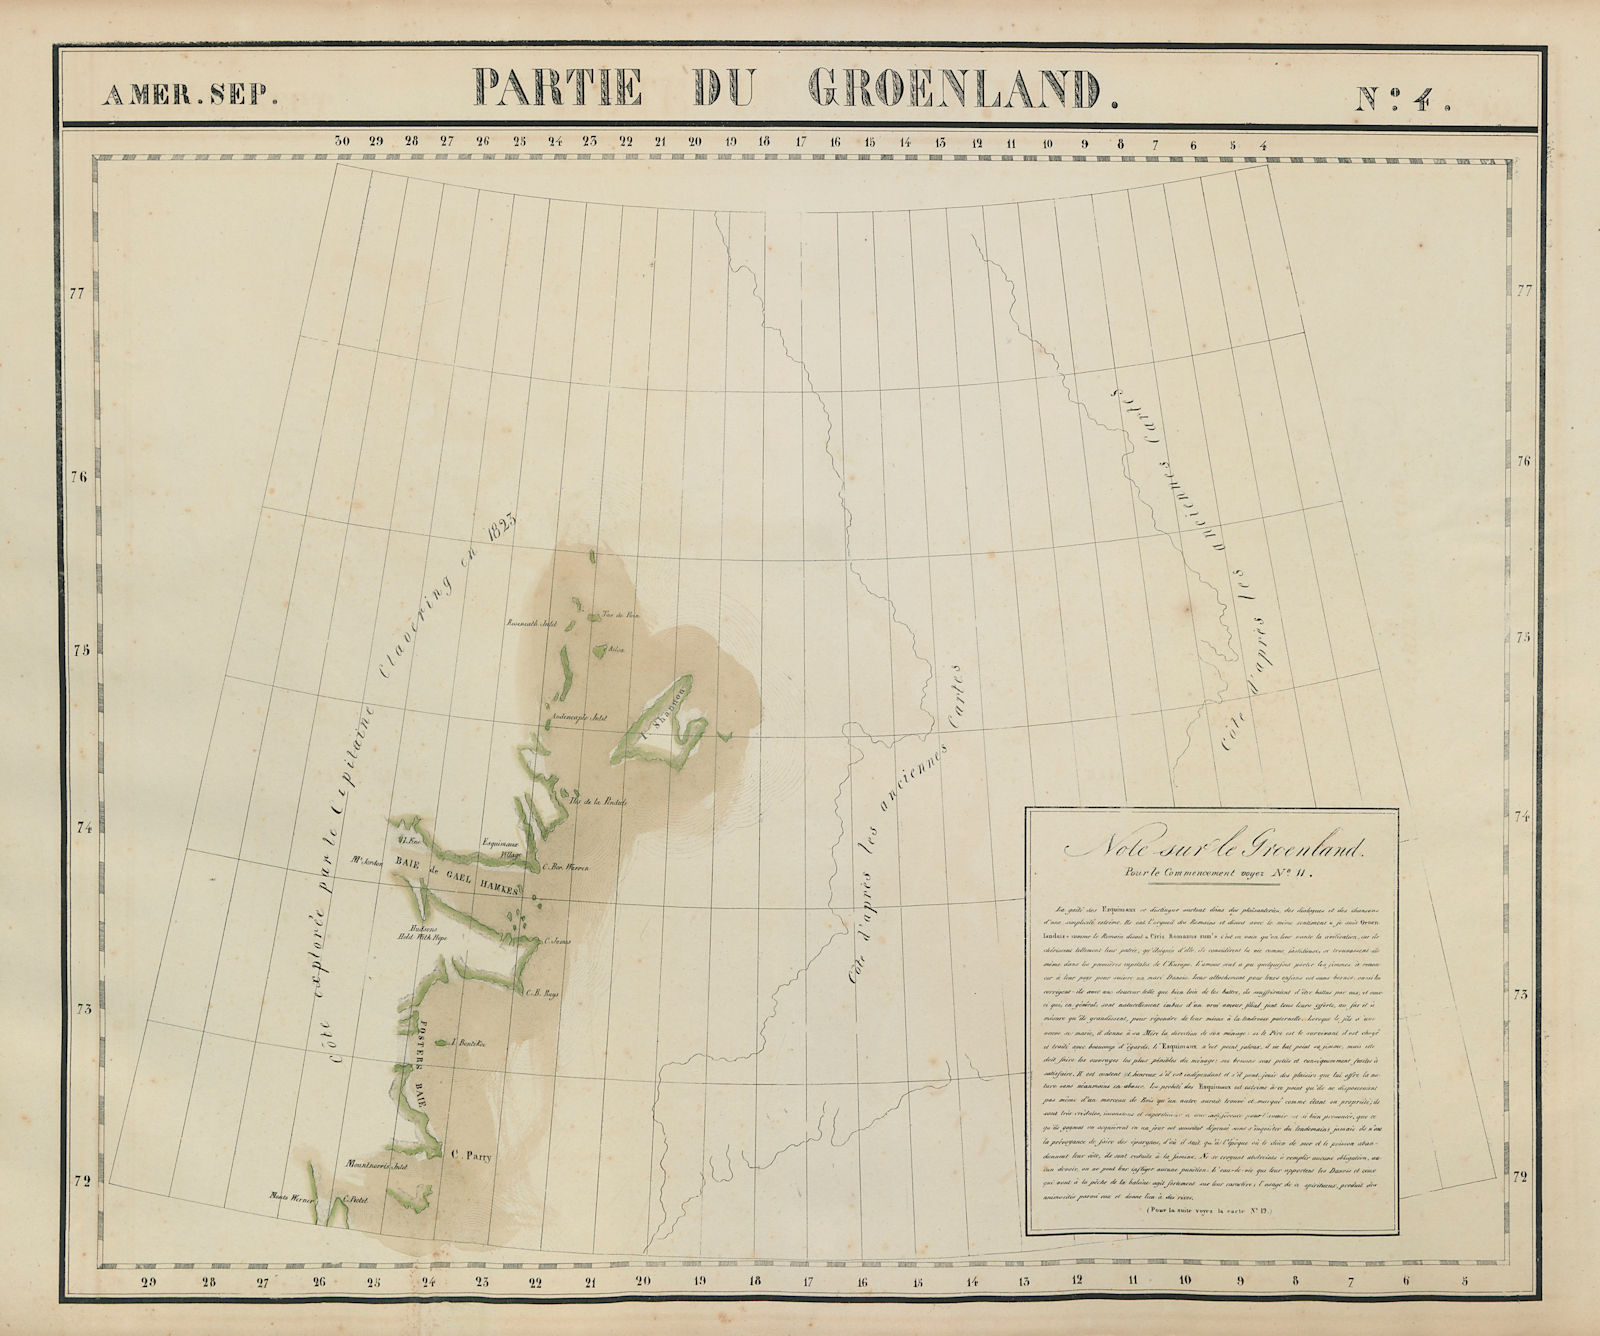 Amér. Sep. Partie du Groenland #4. North east Greenland. VANDERMAELEN 1827 map